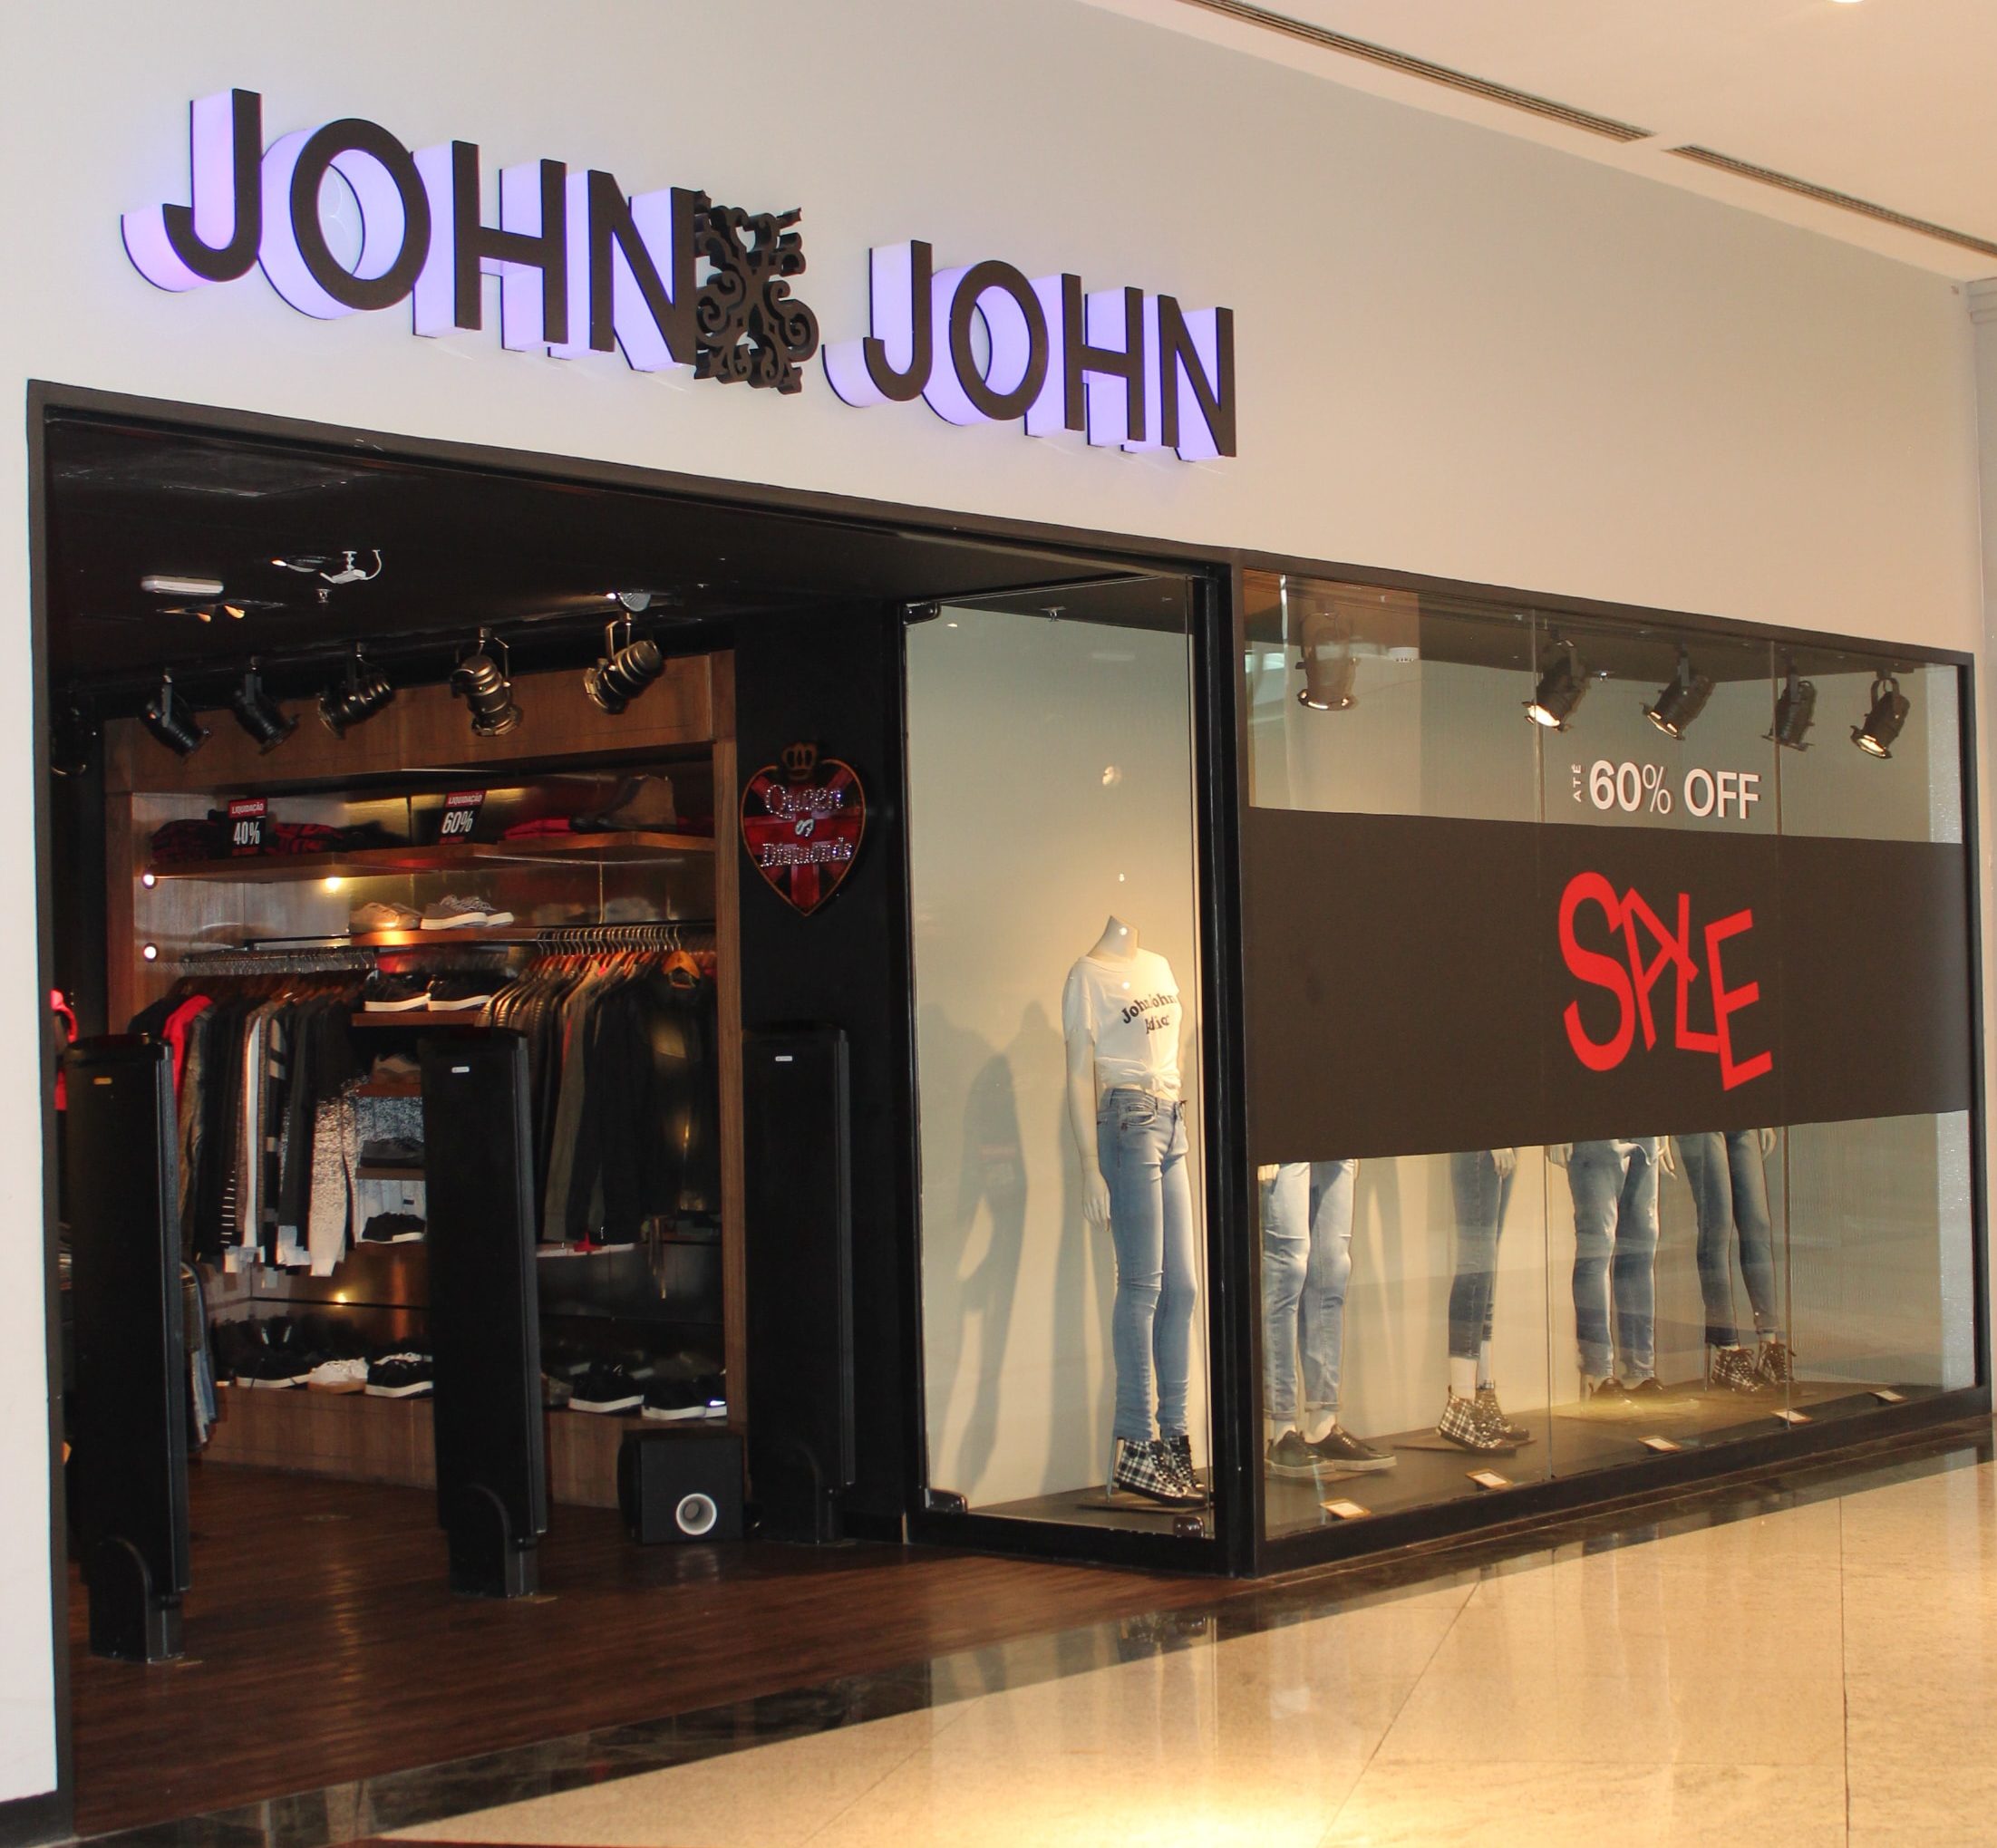 Camiseta John Inc - John John - Zona Sul Boutique